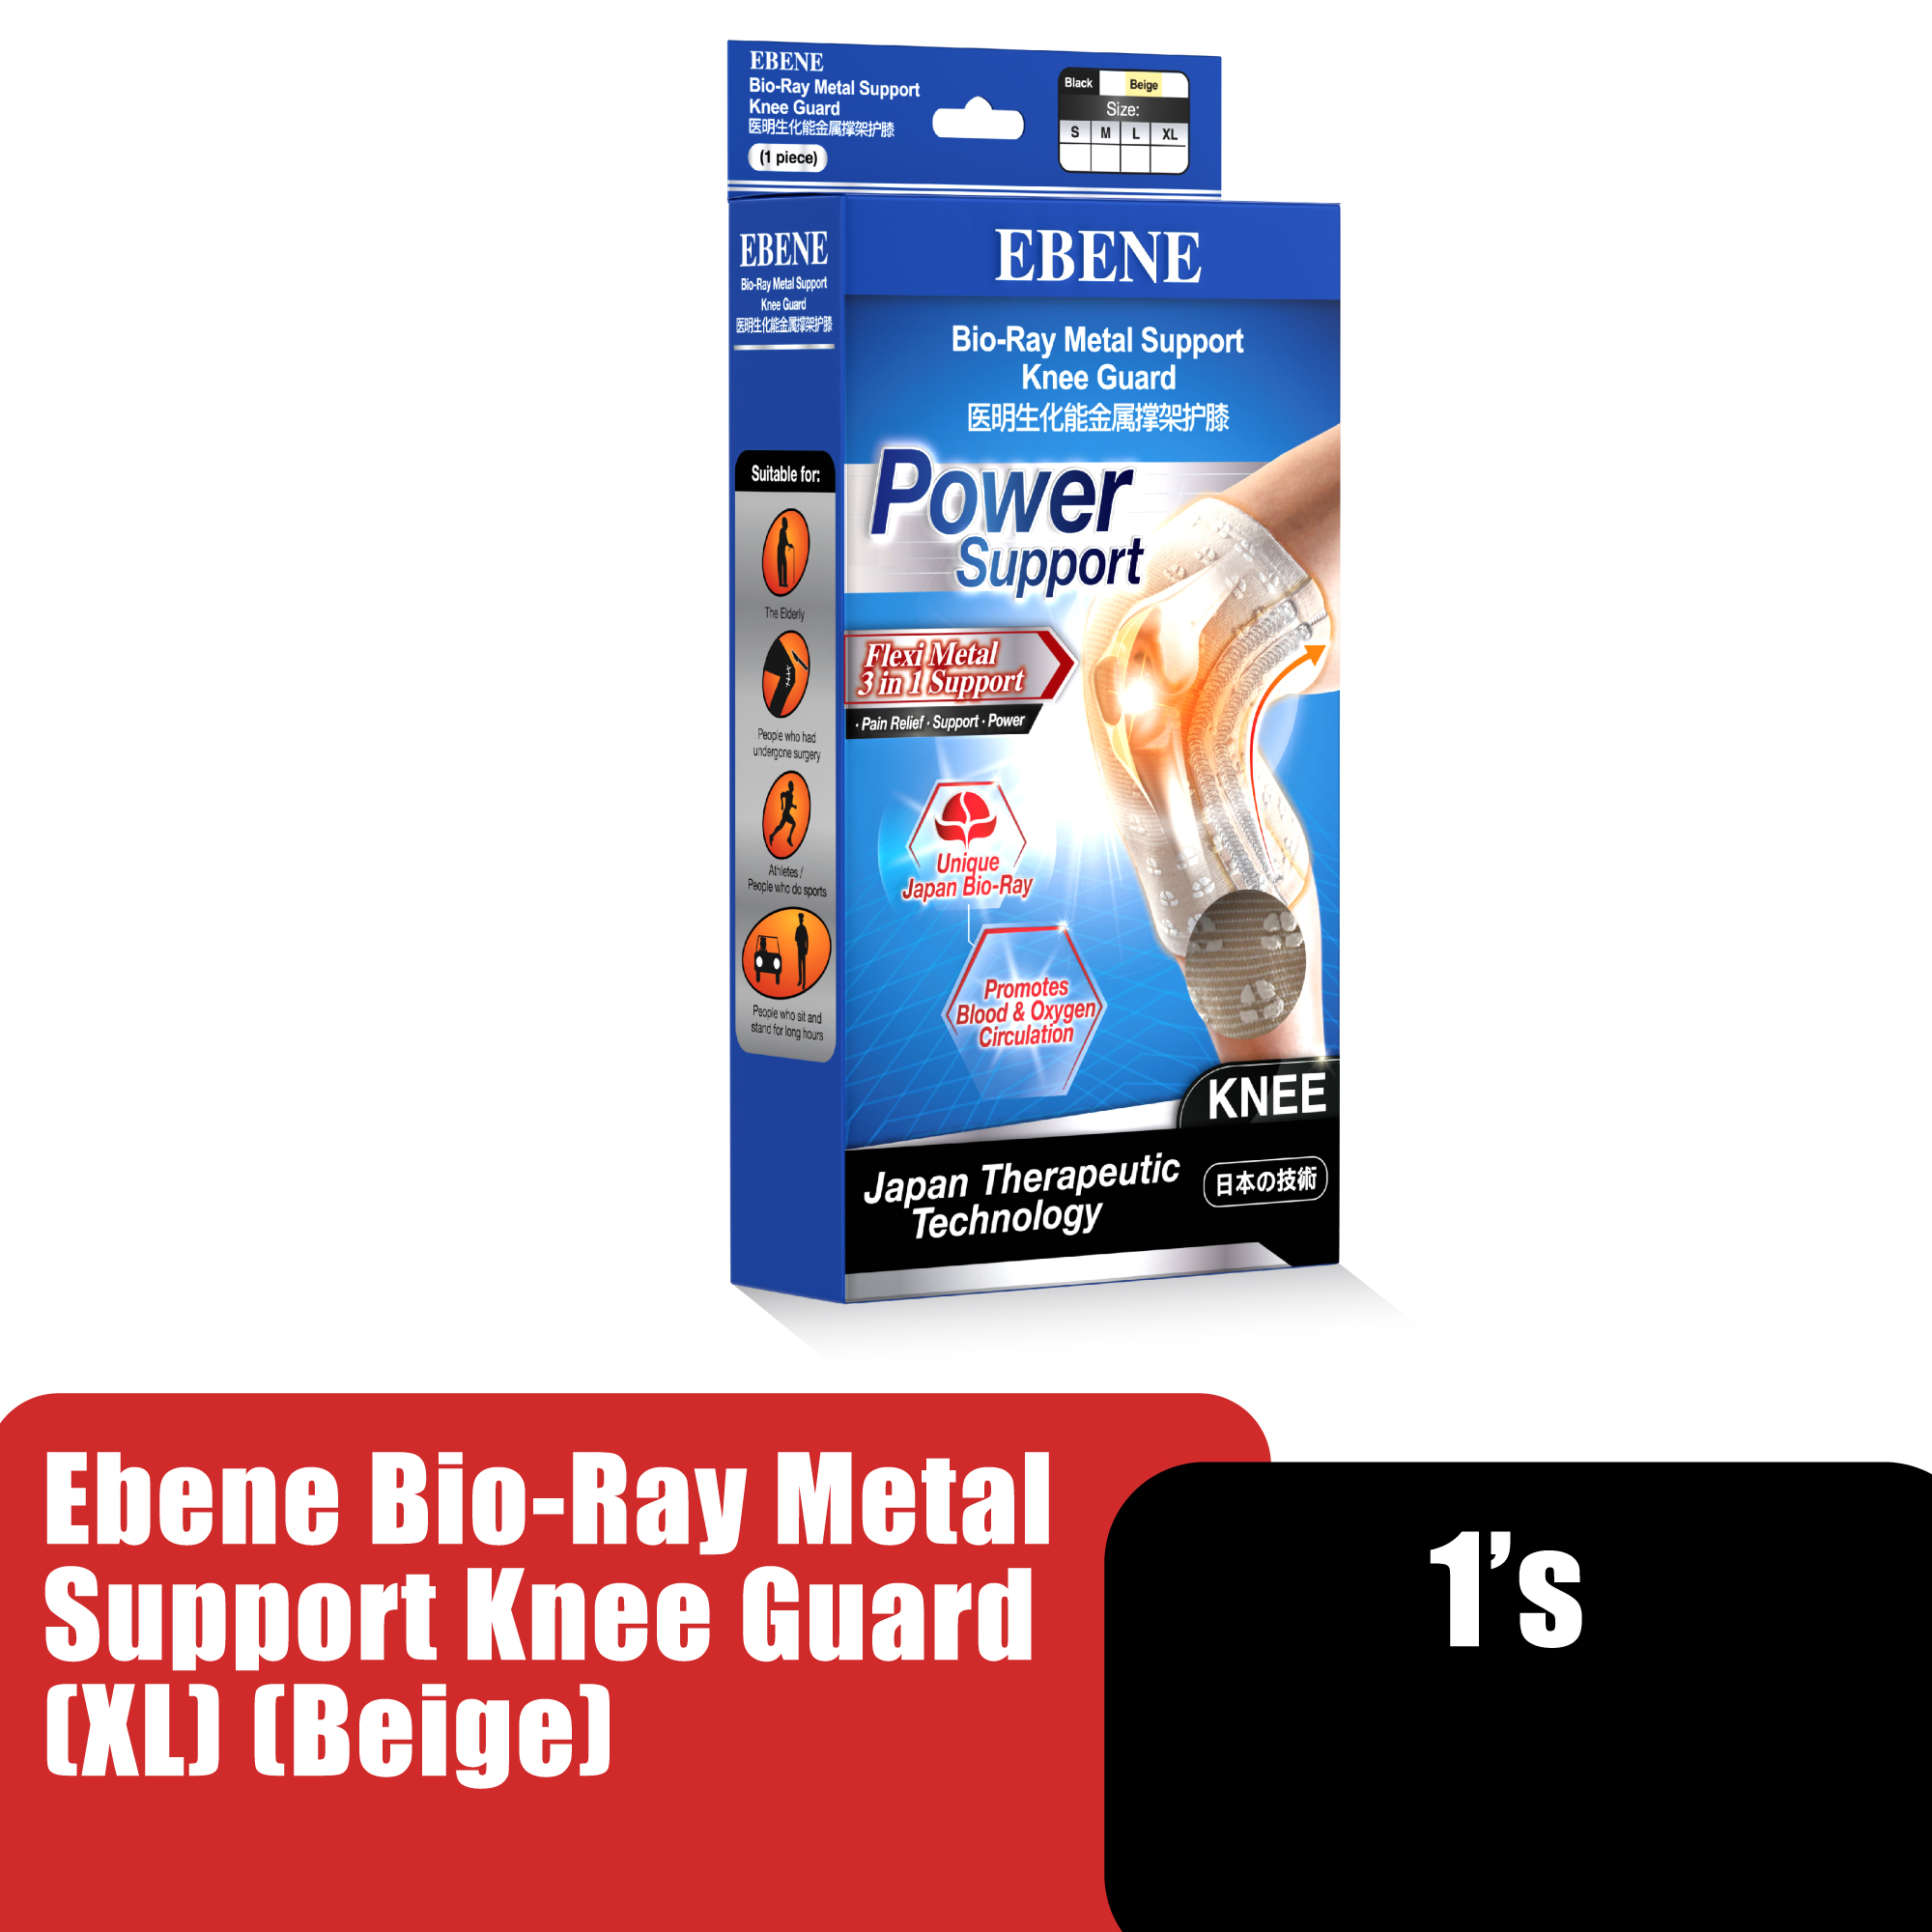 Ebene Bio-Ray Metal Support Knee Guard - XL size  (Beige)